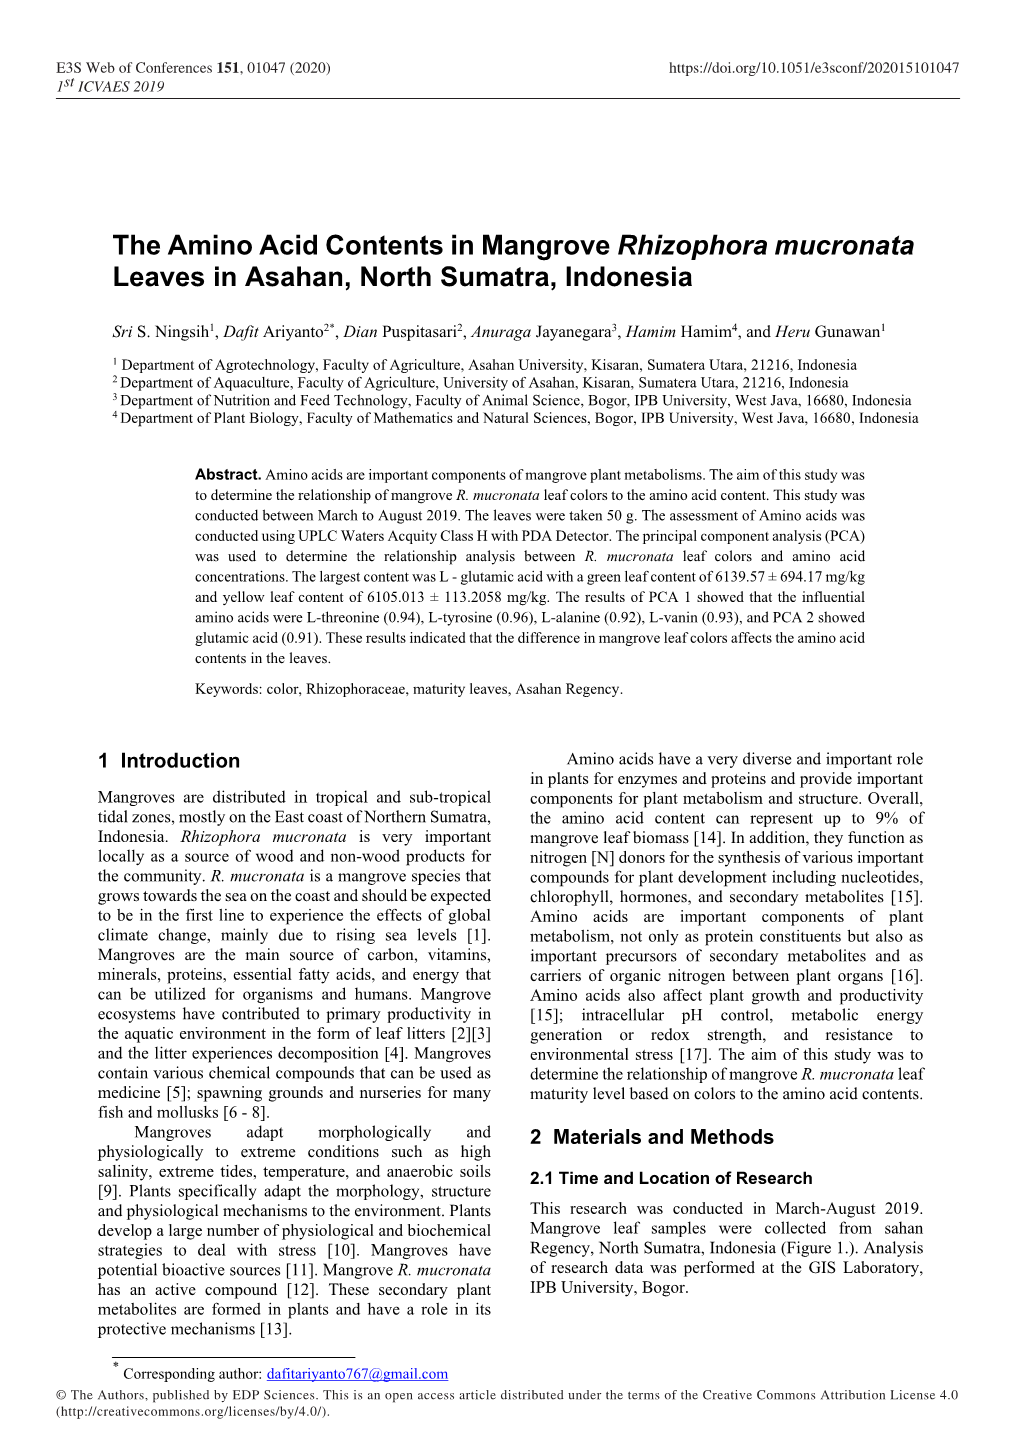 The Amino Acid Contents in Mangrove Rhizophora Mucronata Leaves in Asahan, North Sumatra, Indonesia